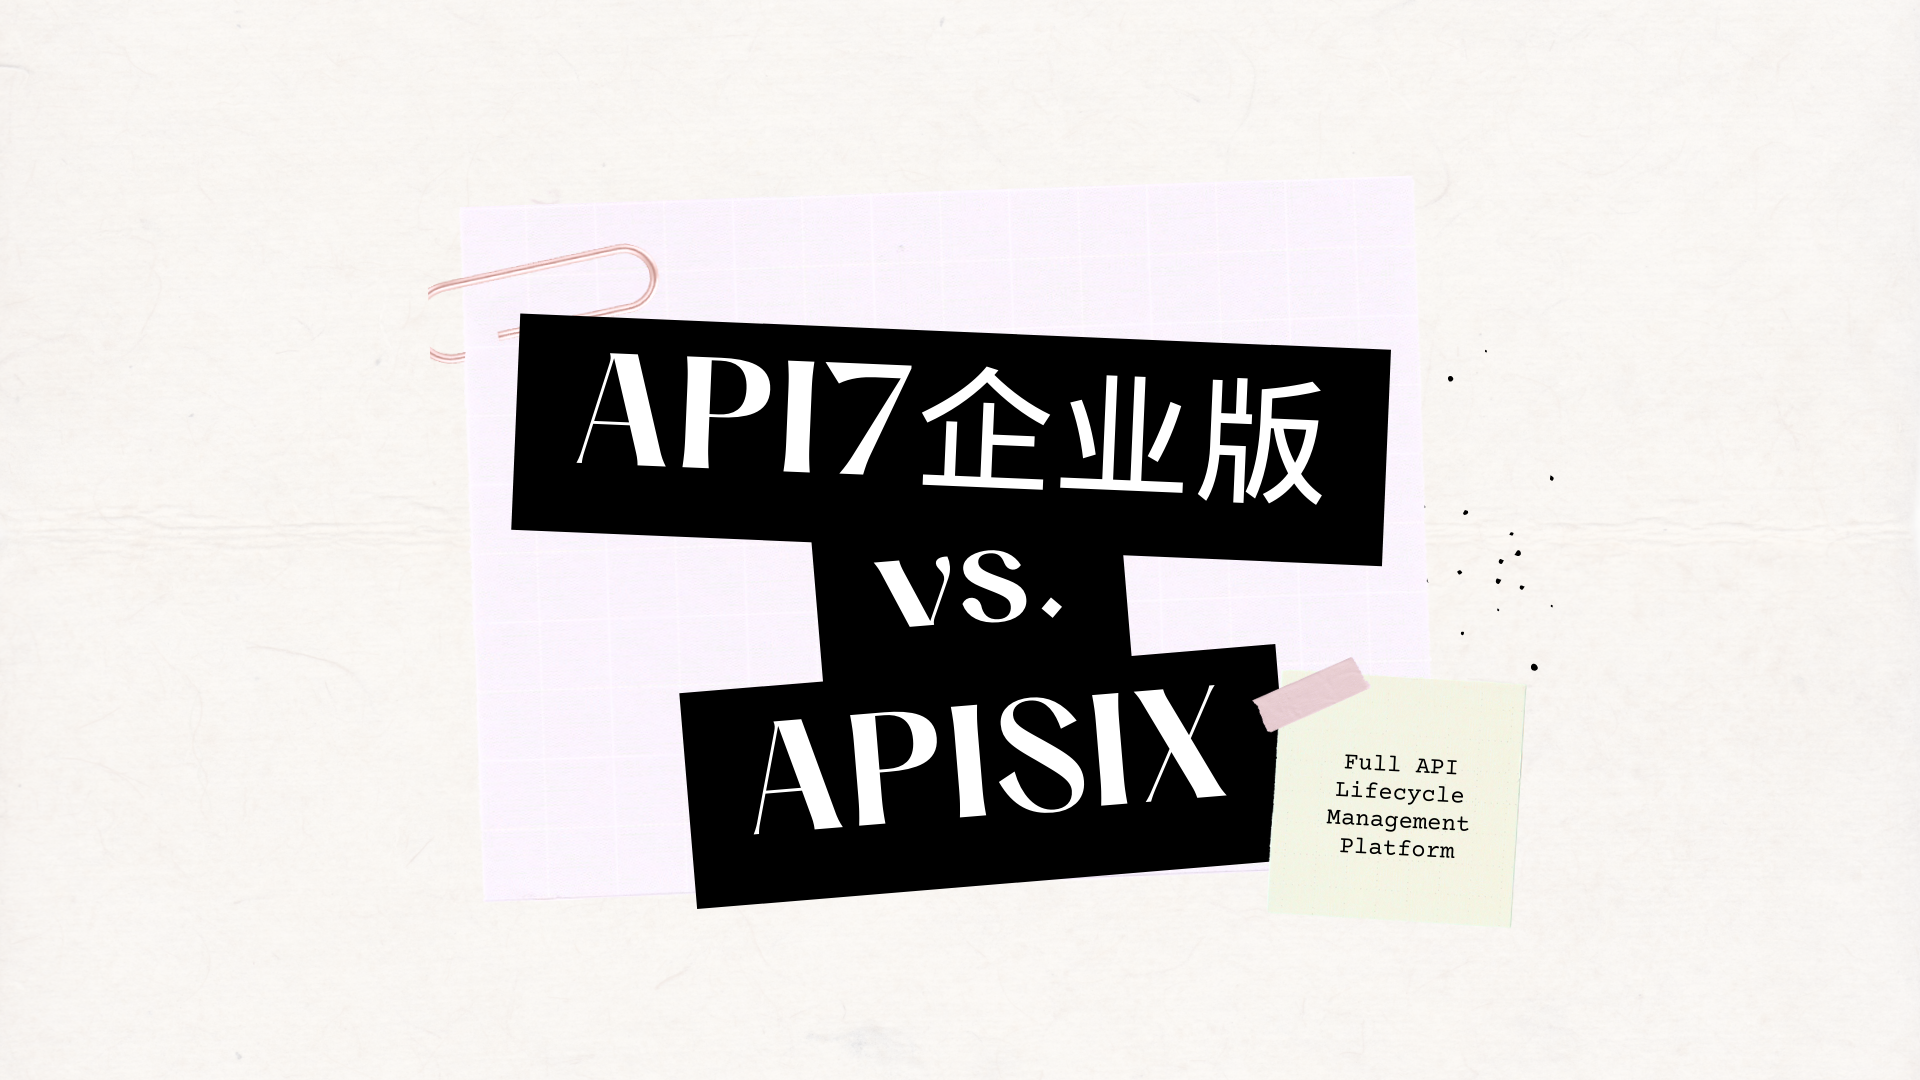 API7 Enterprise 和 Apache APISIX 的区别是什么？有哪些优势？